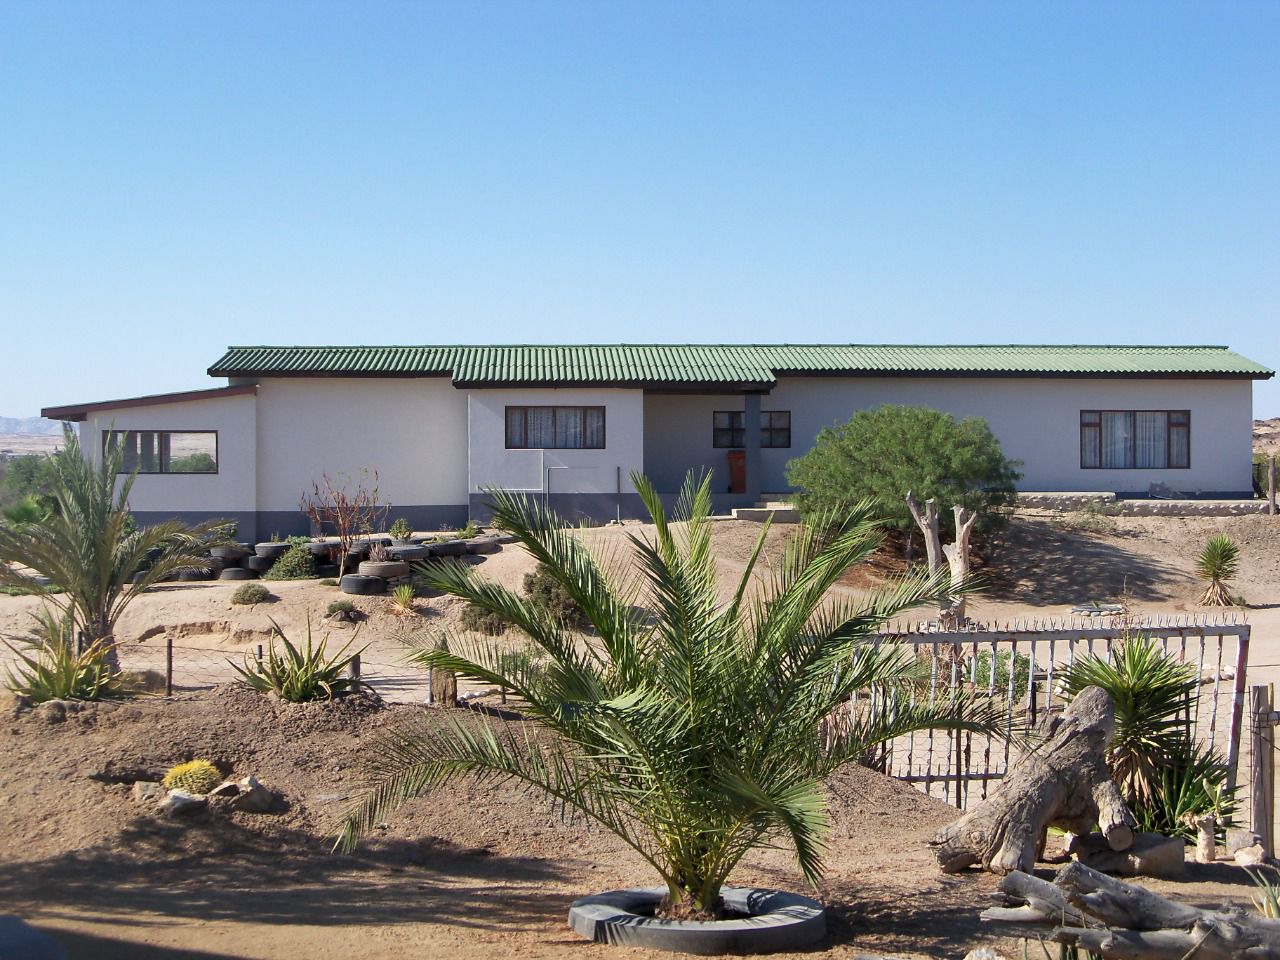 Land in Namibia - WhatsApp Image 2021-06-02 at 14.47.48 (2).jpeg